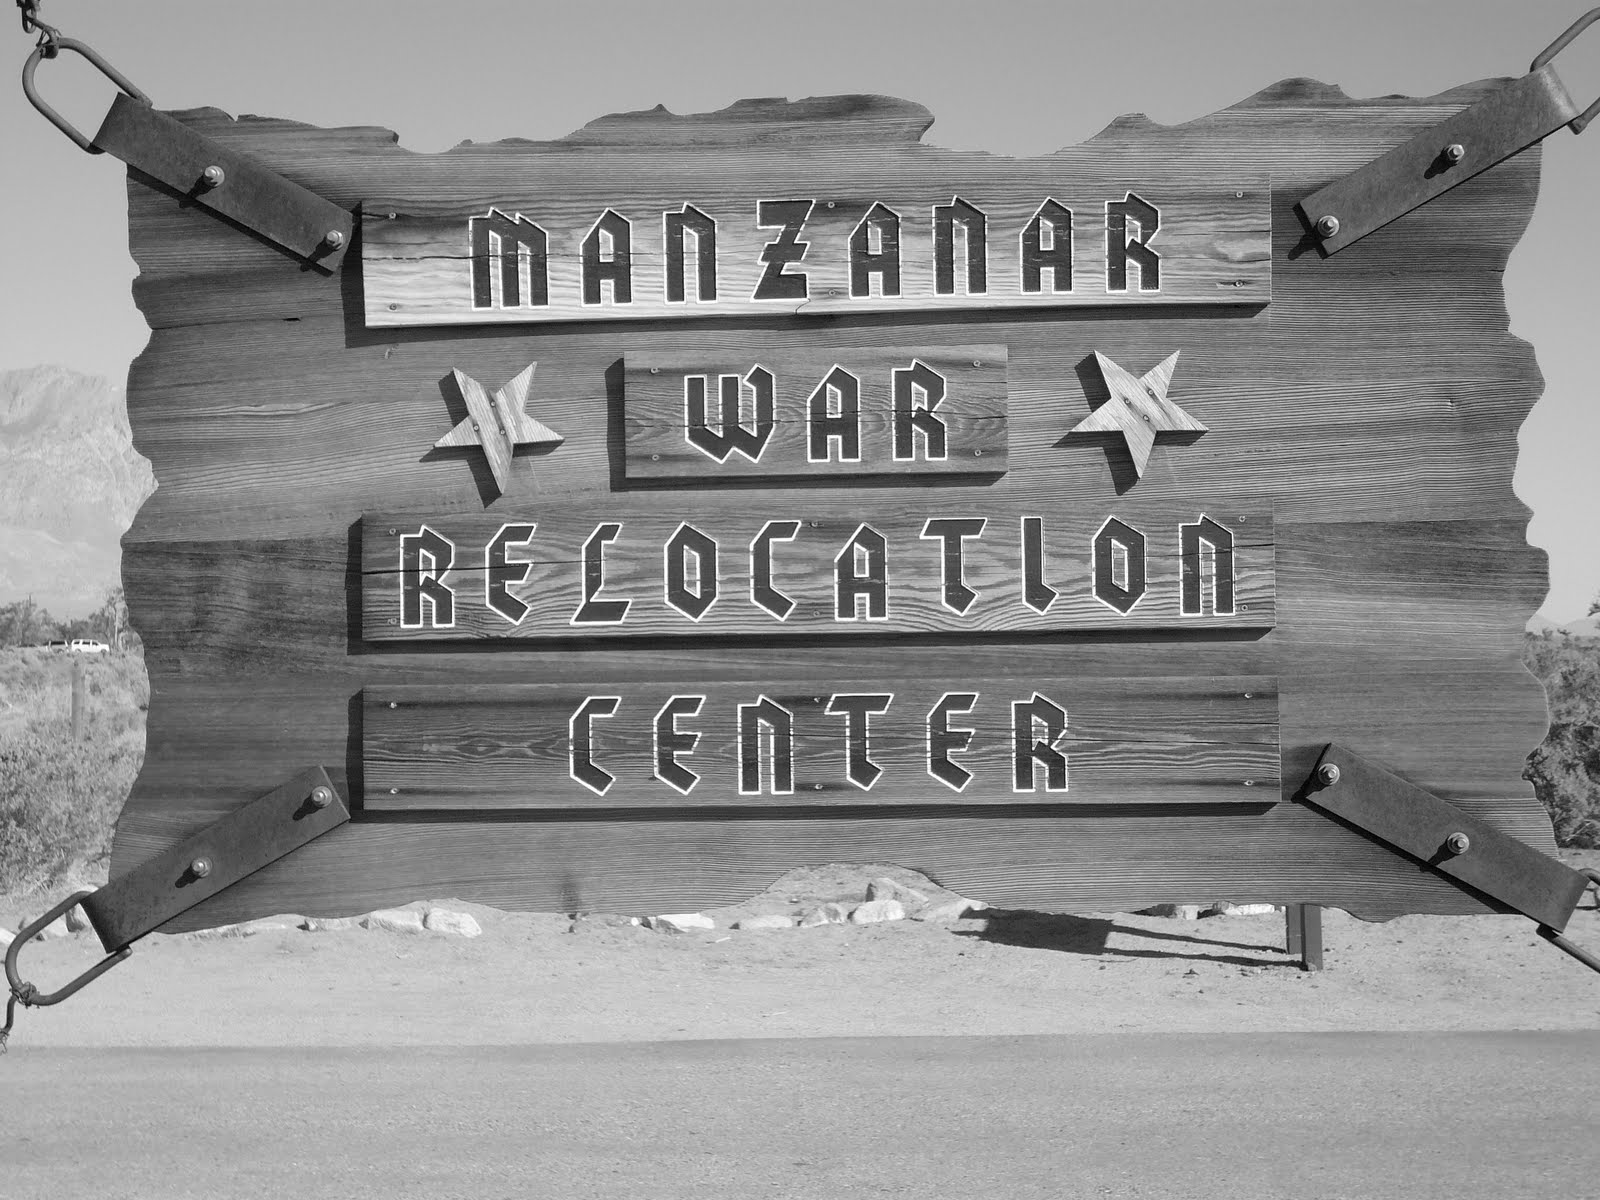 Farewell to manzanar book review essay